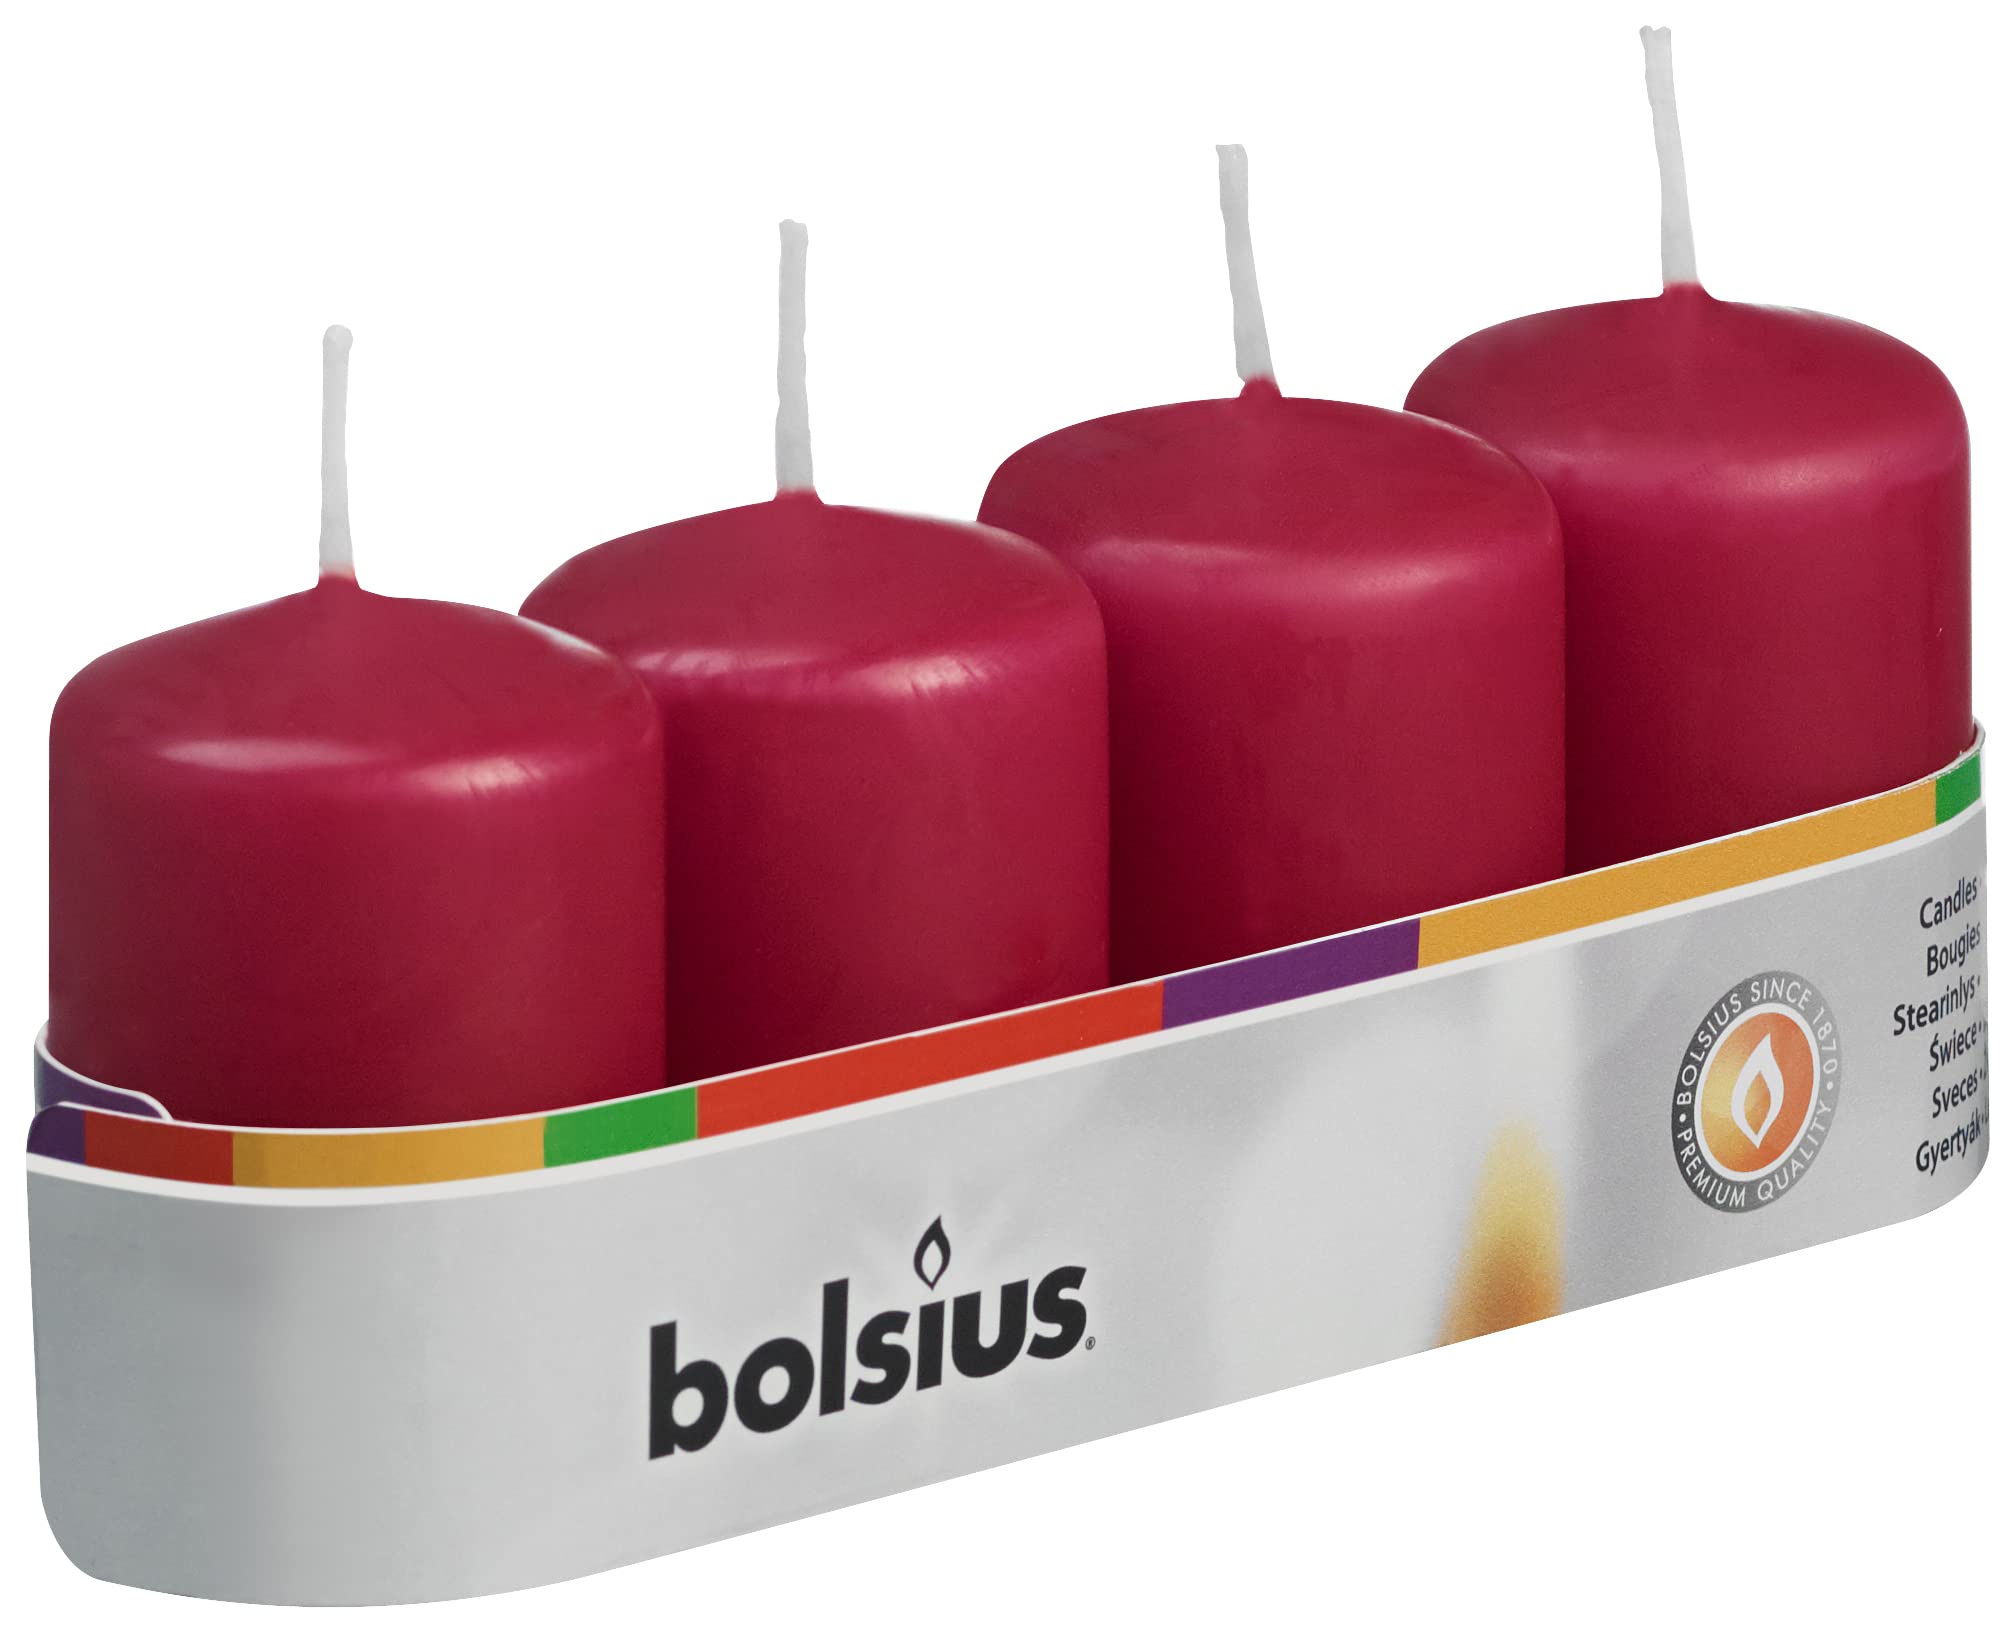 BOLSIUS Pillar Candles - 7 Burn Hours - Premium European Quality  - Like New